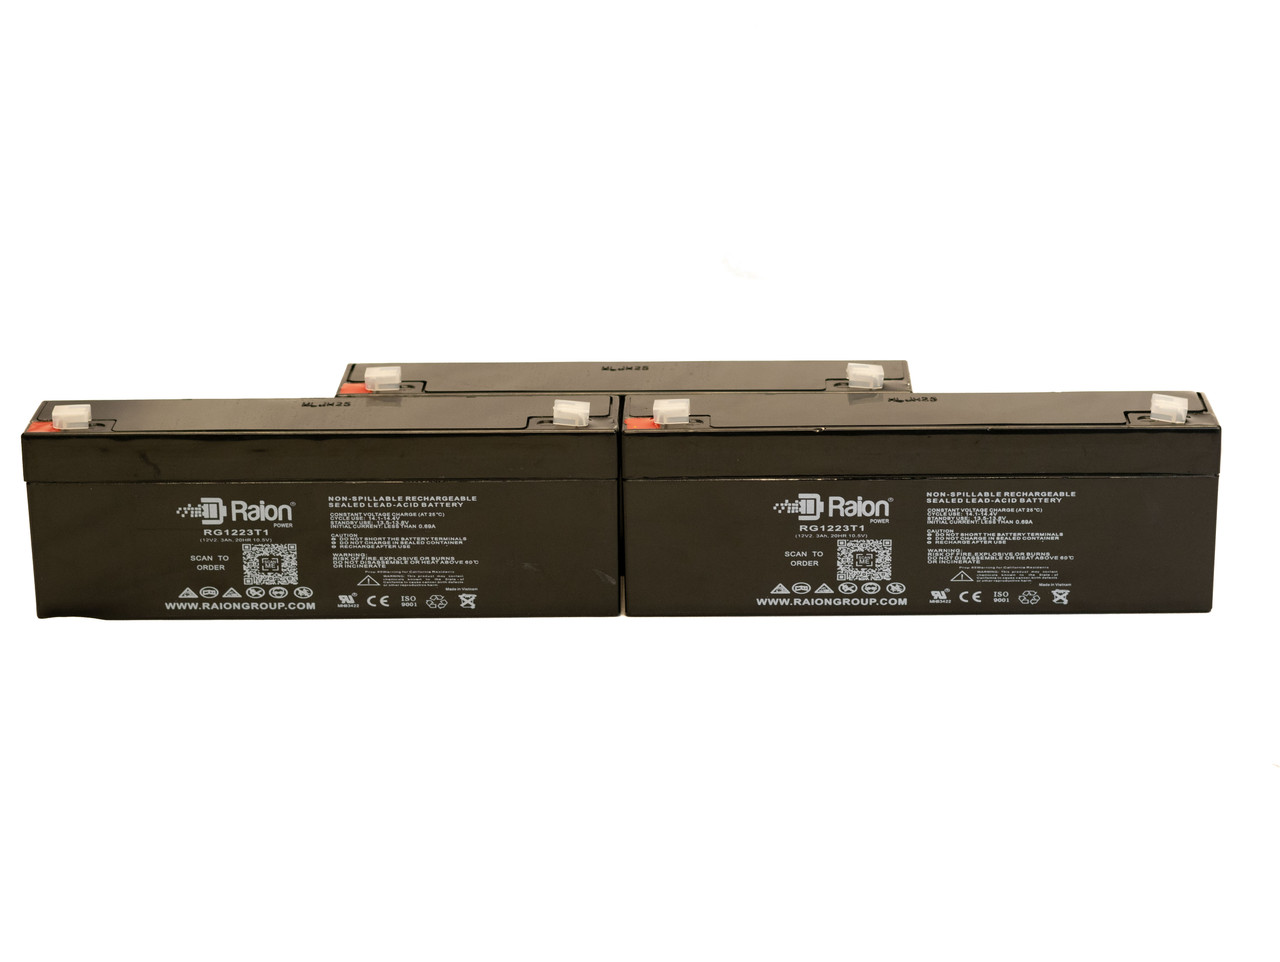 Raion Power 12V 2.3Ah RG1223T1 Compatible Replacement Battery for DET Power SJ12V2.3Ah - 3 Pack